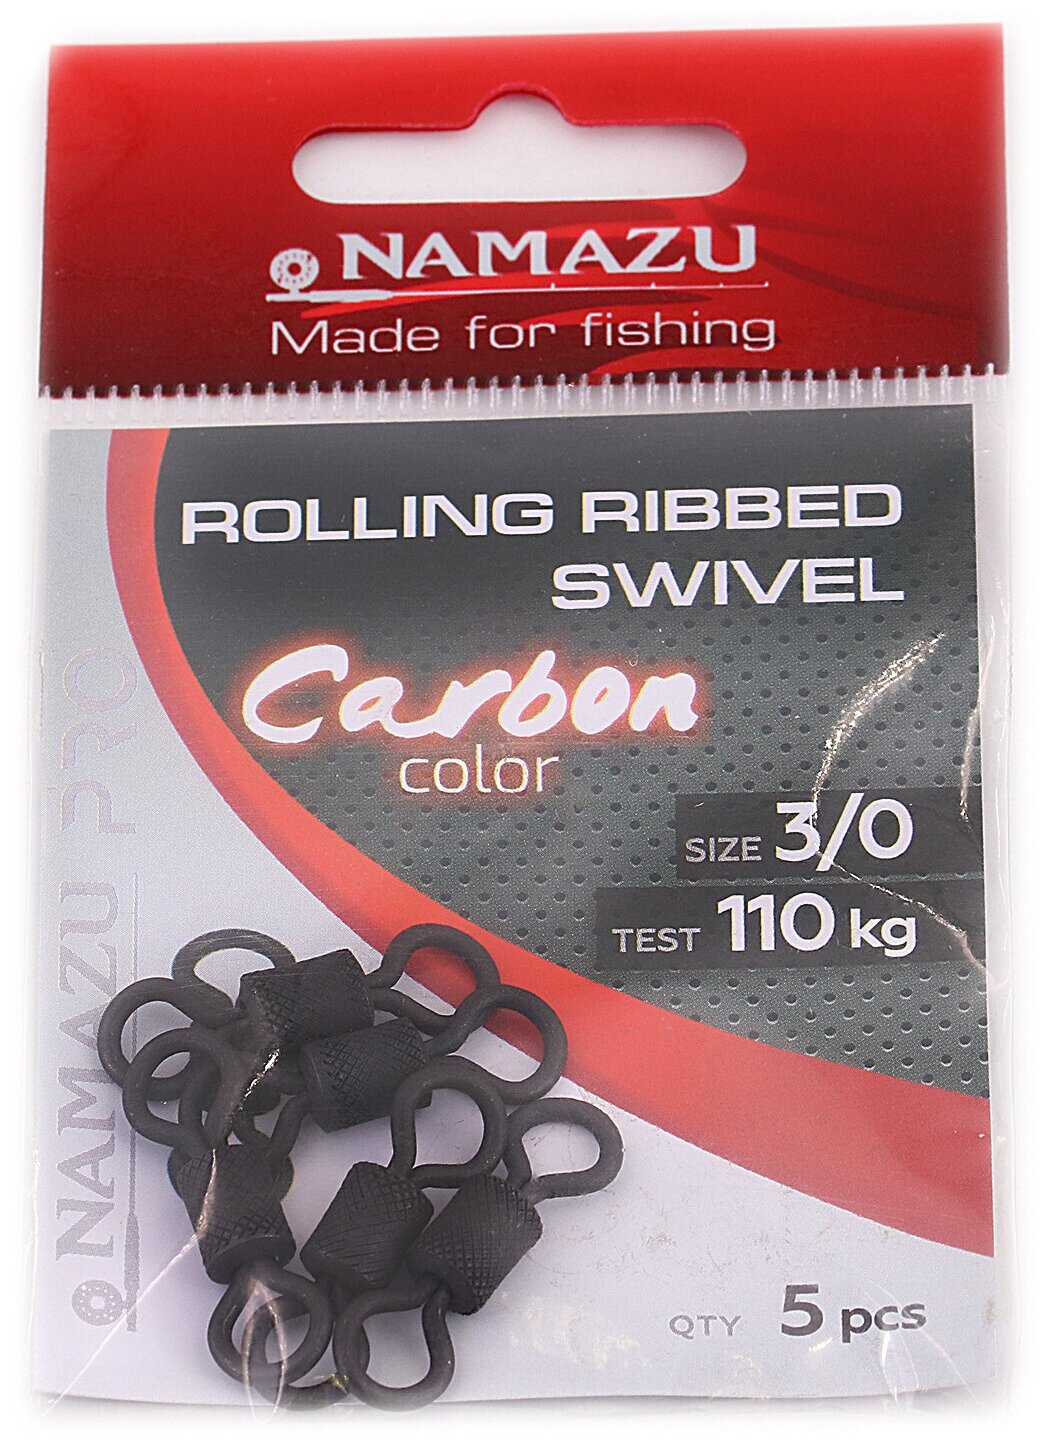 Вертлюг Namazu Pro ROLLING RIBBED SWIVEL латунь цв. Carbon р